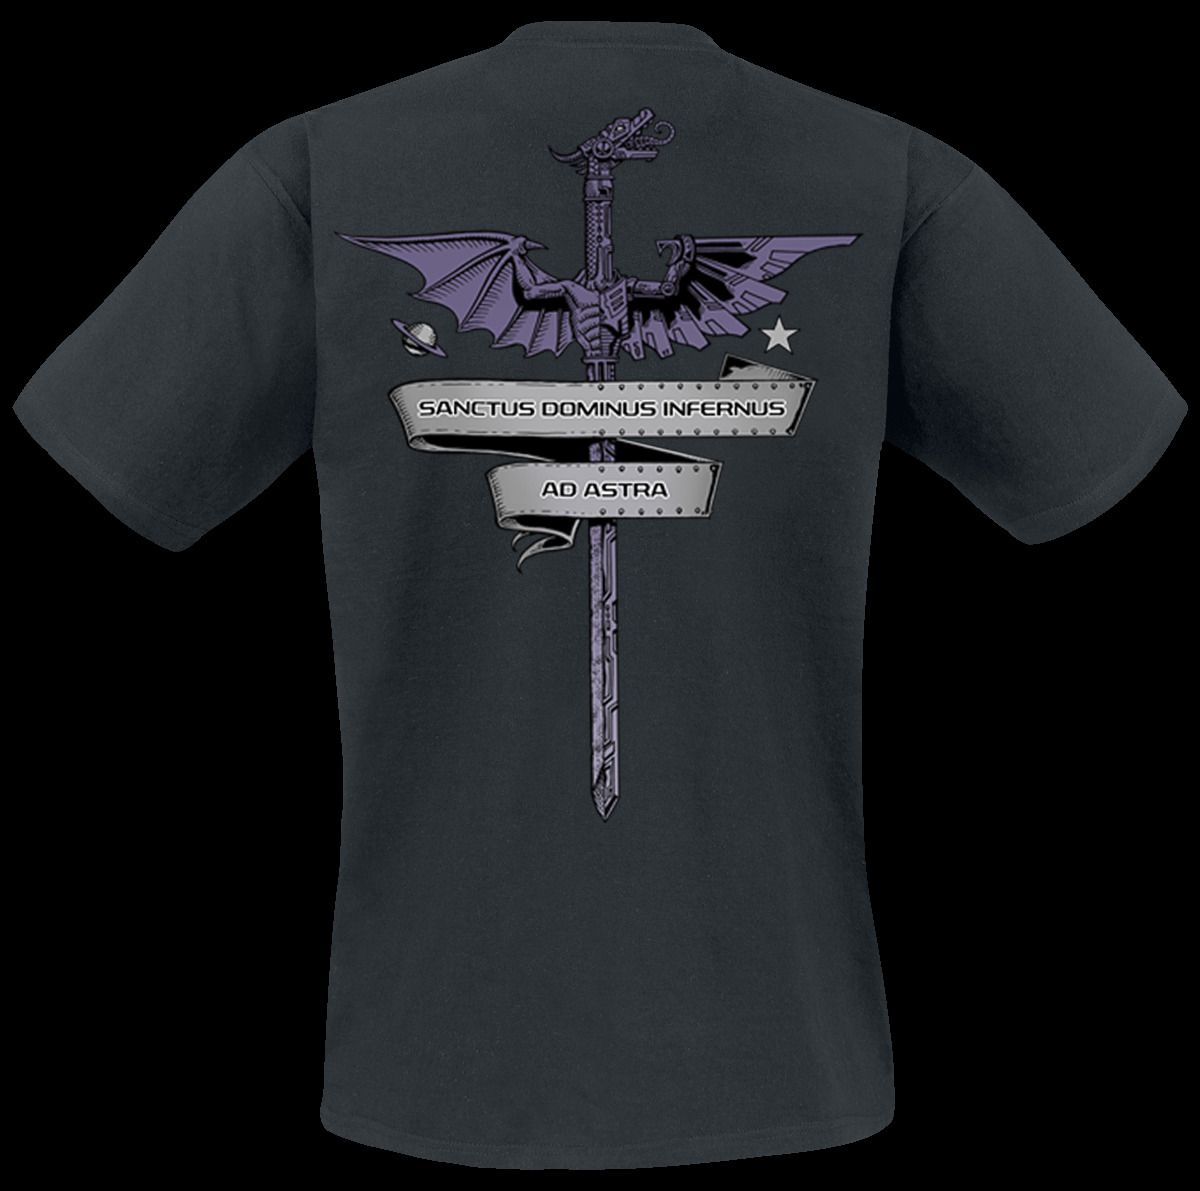 Gloryhammer Sanctus Dominus Infernus Ad Astra T Shirt Black Tees